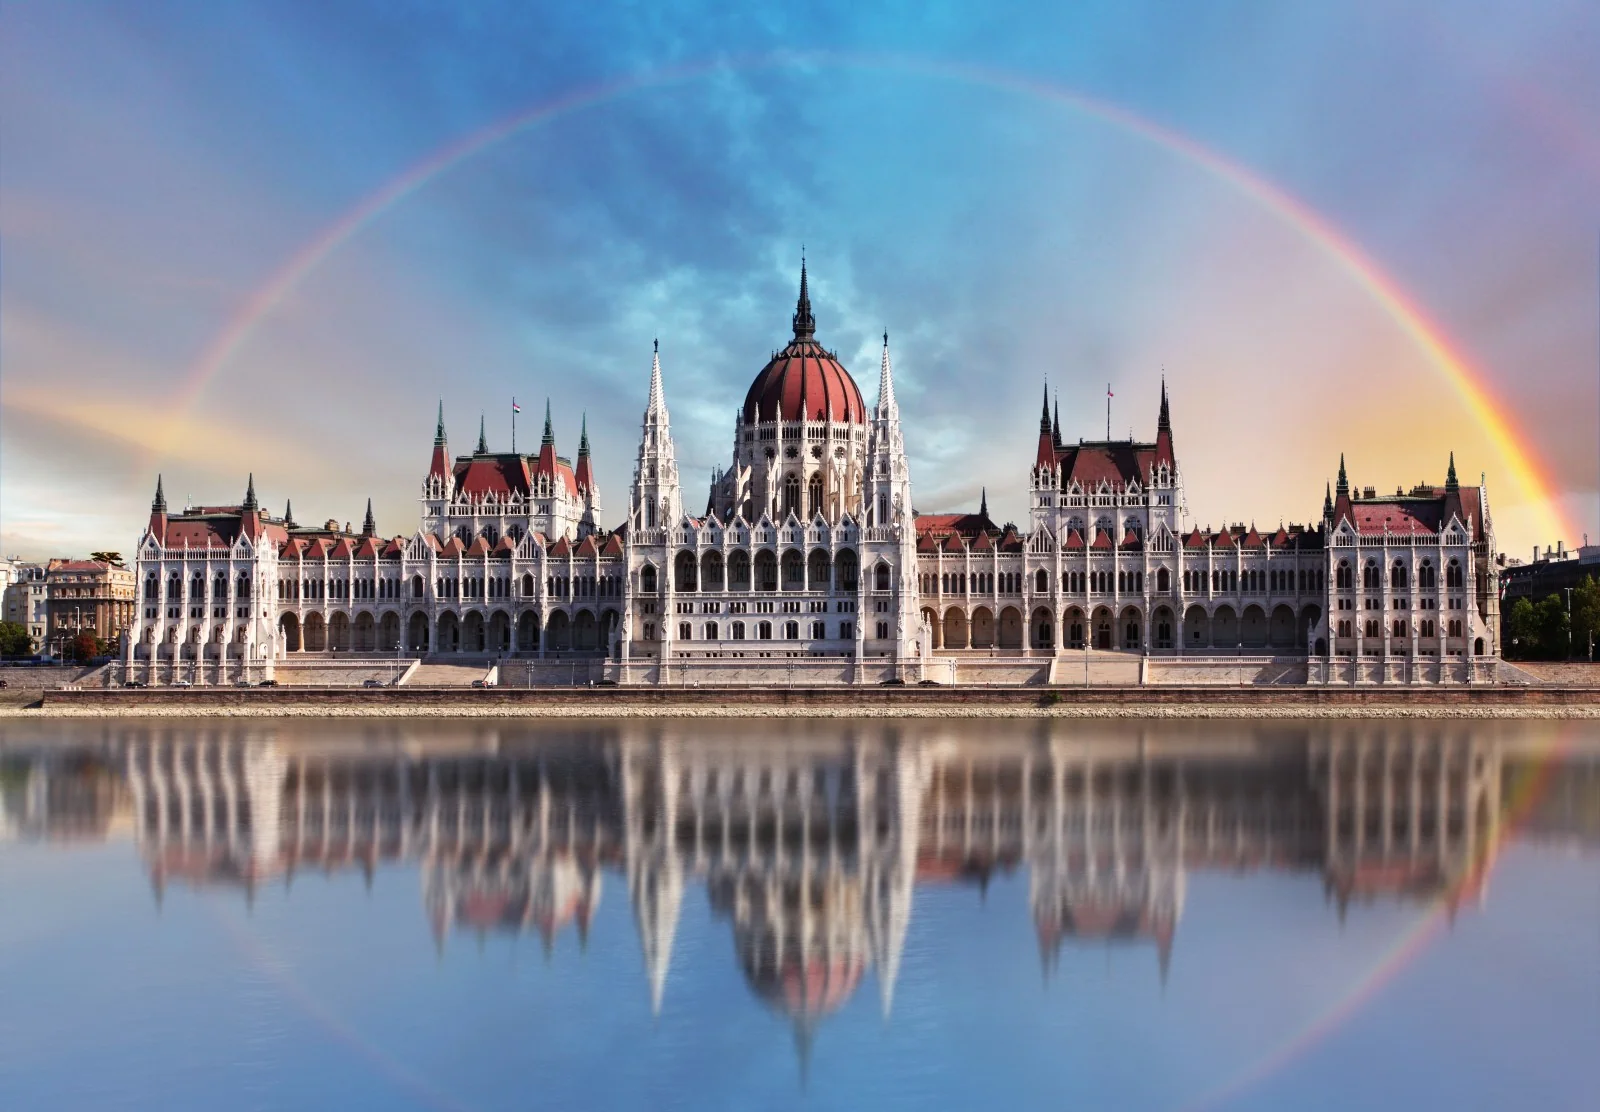 Visit the Hungarian Parliament Building